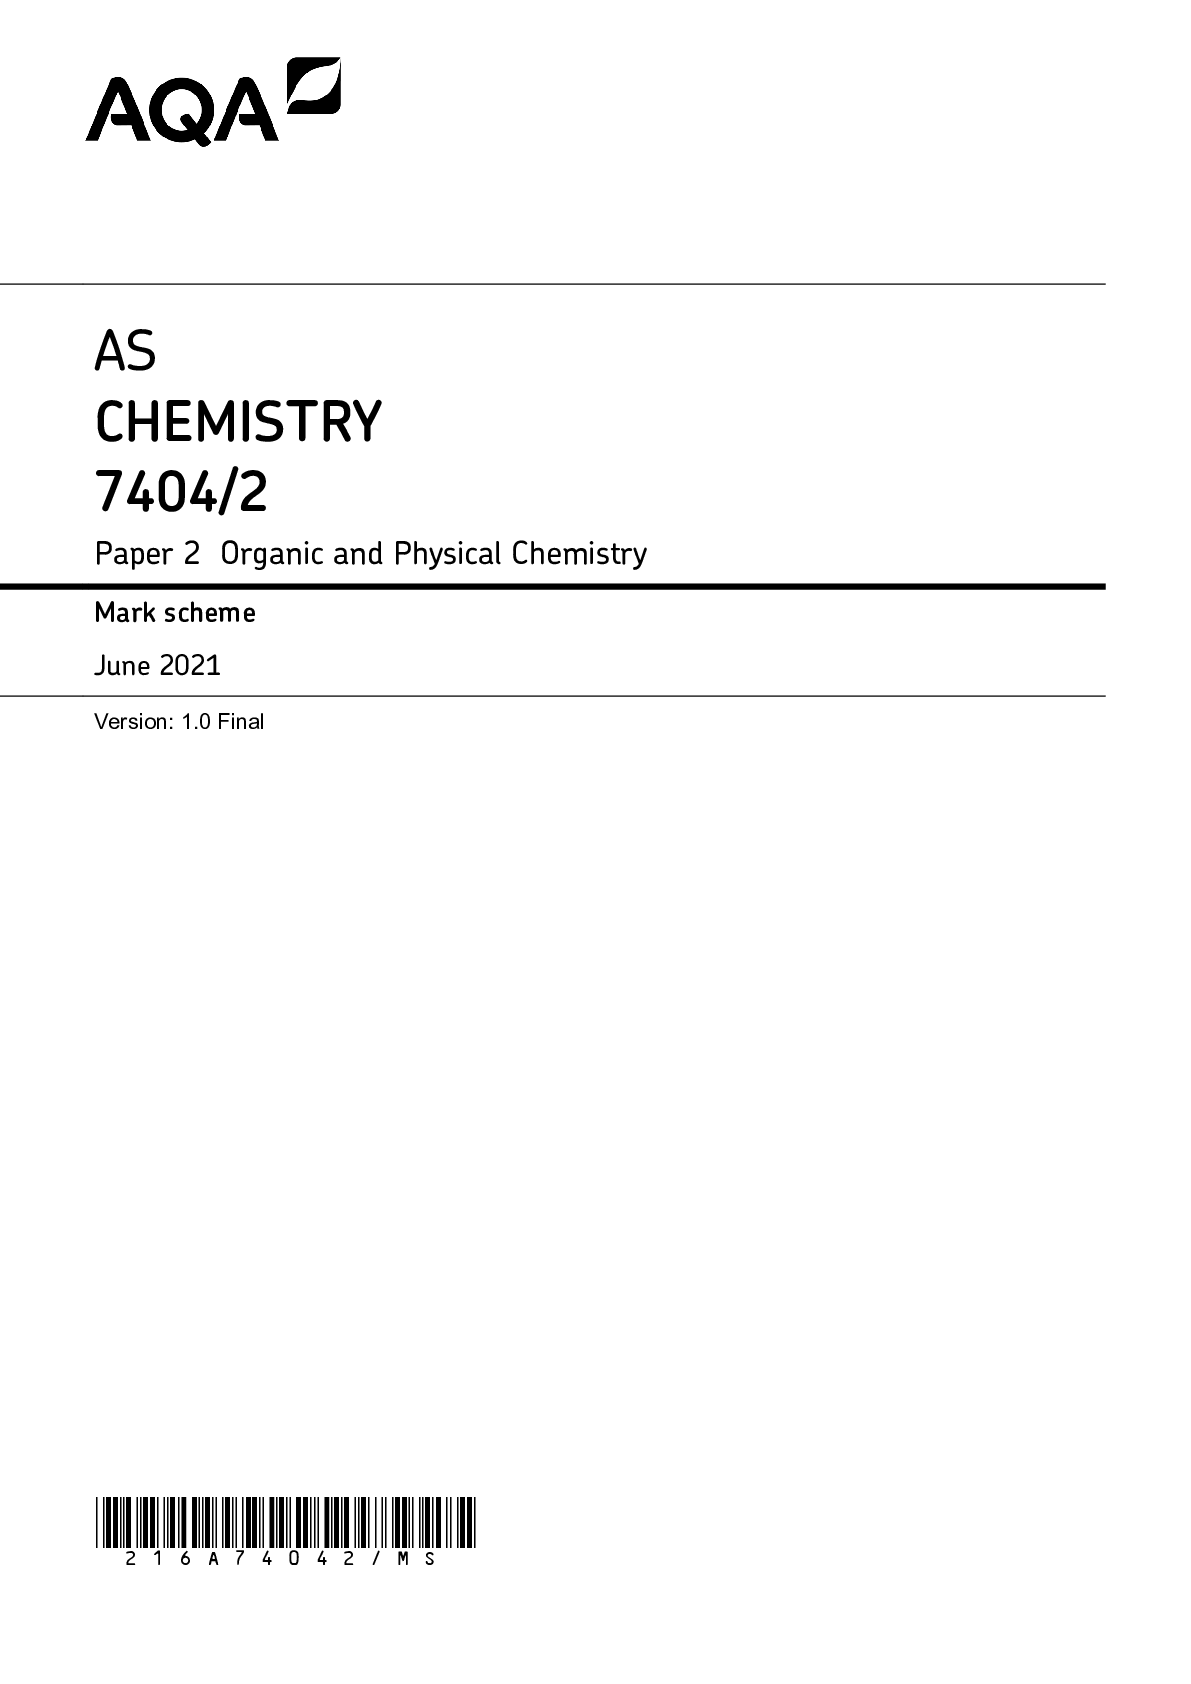 Final MS Jun21 v1.0 AS CHEMISTRY 7404/2